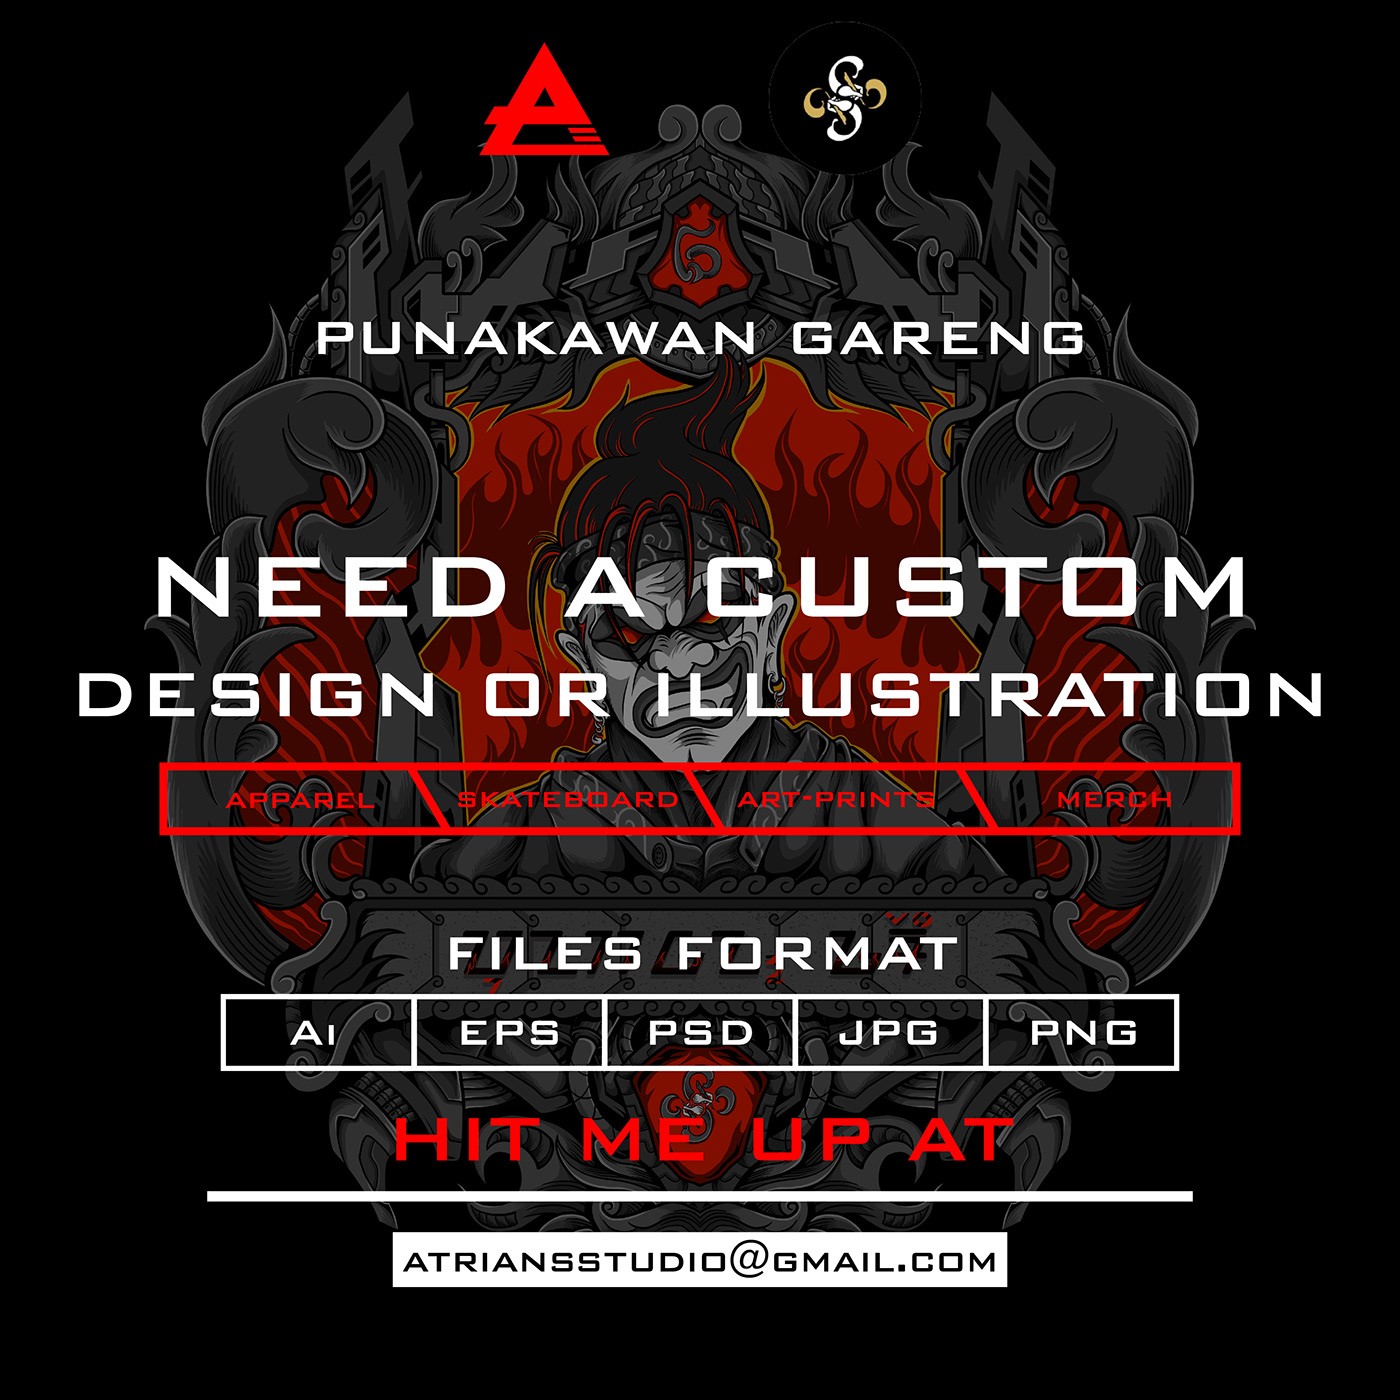 apparel asian art dongeng fiction frame art gareng history illustration design punakawan Tshirt Design